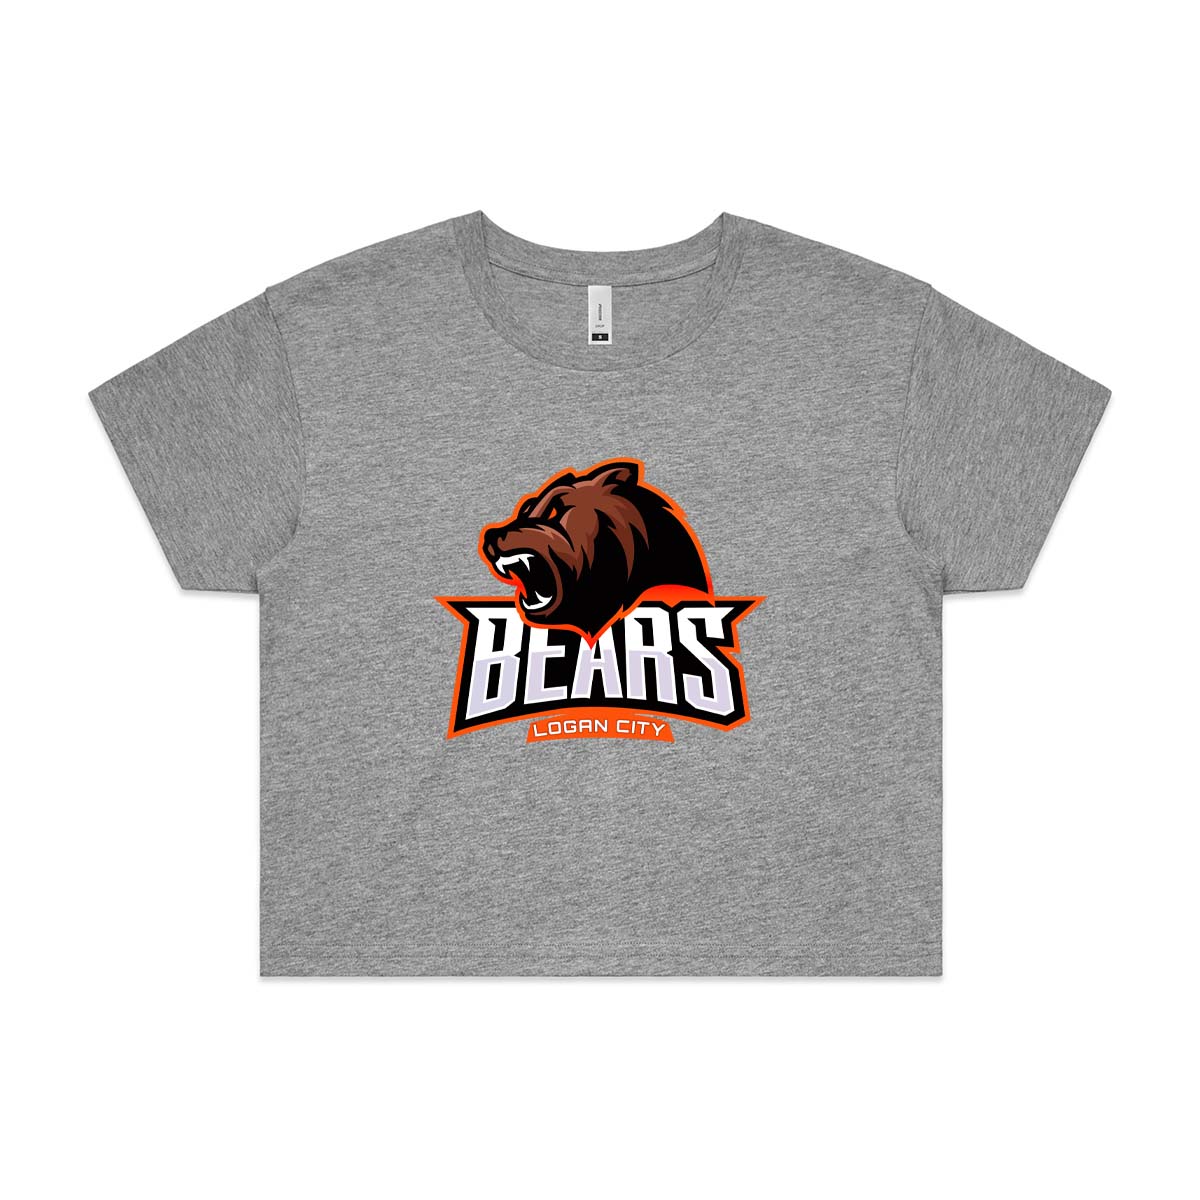 Logan City Bears Cropped T-shirt